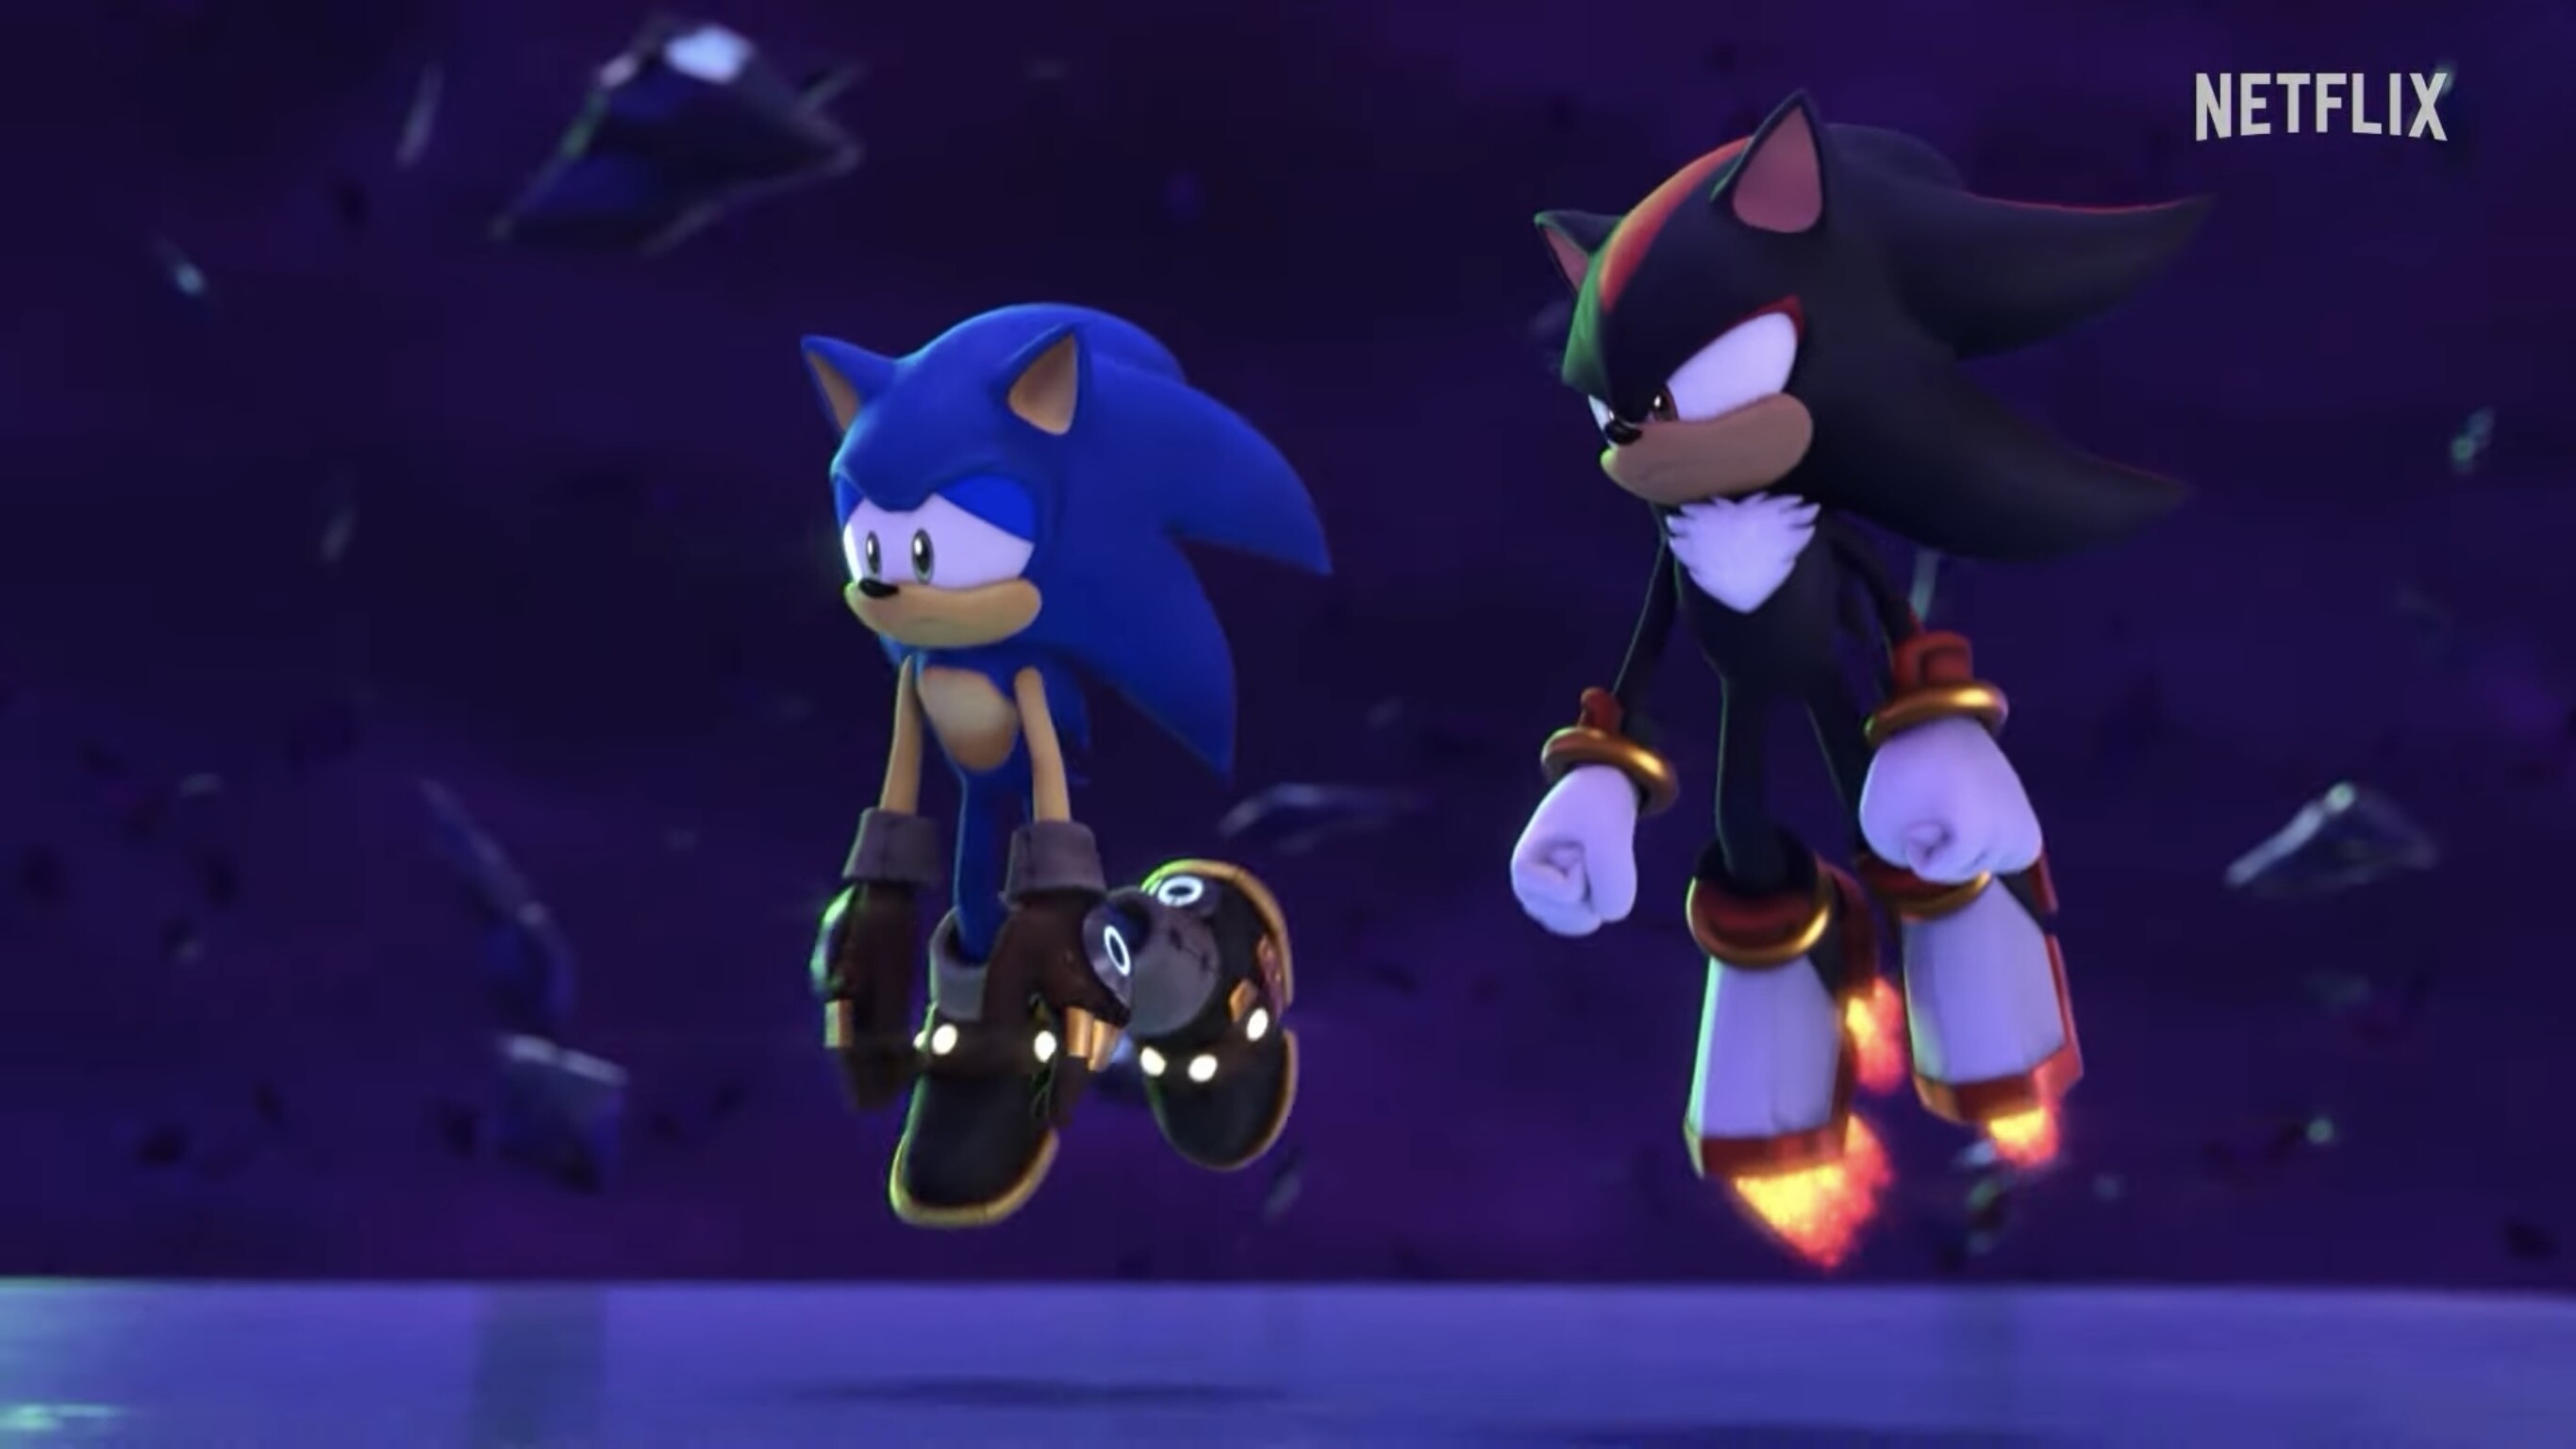 Sonic Prime Season 2 Review - IGN